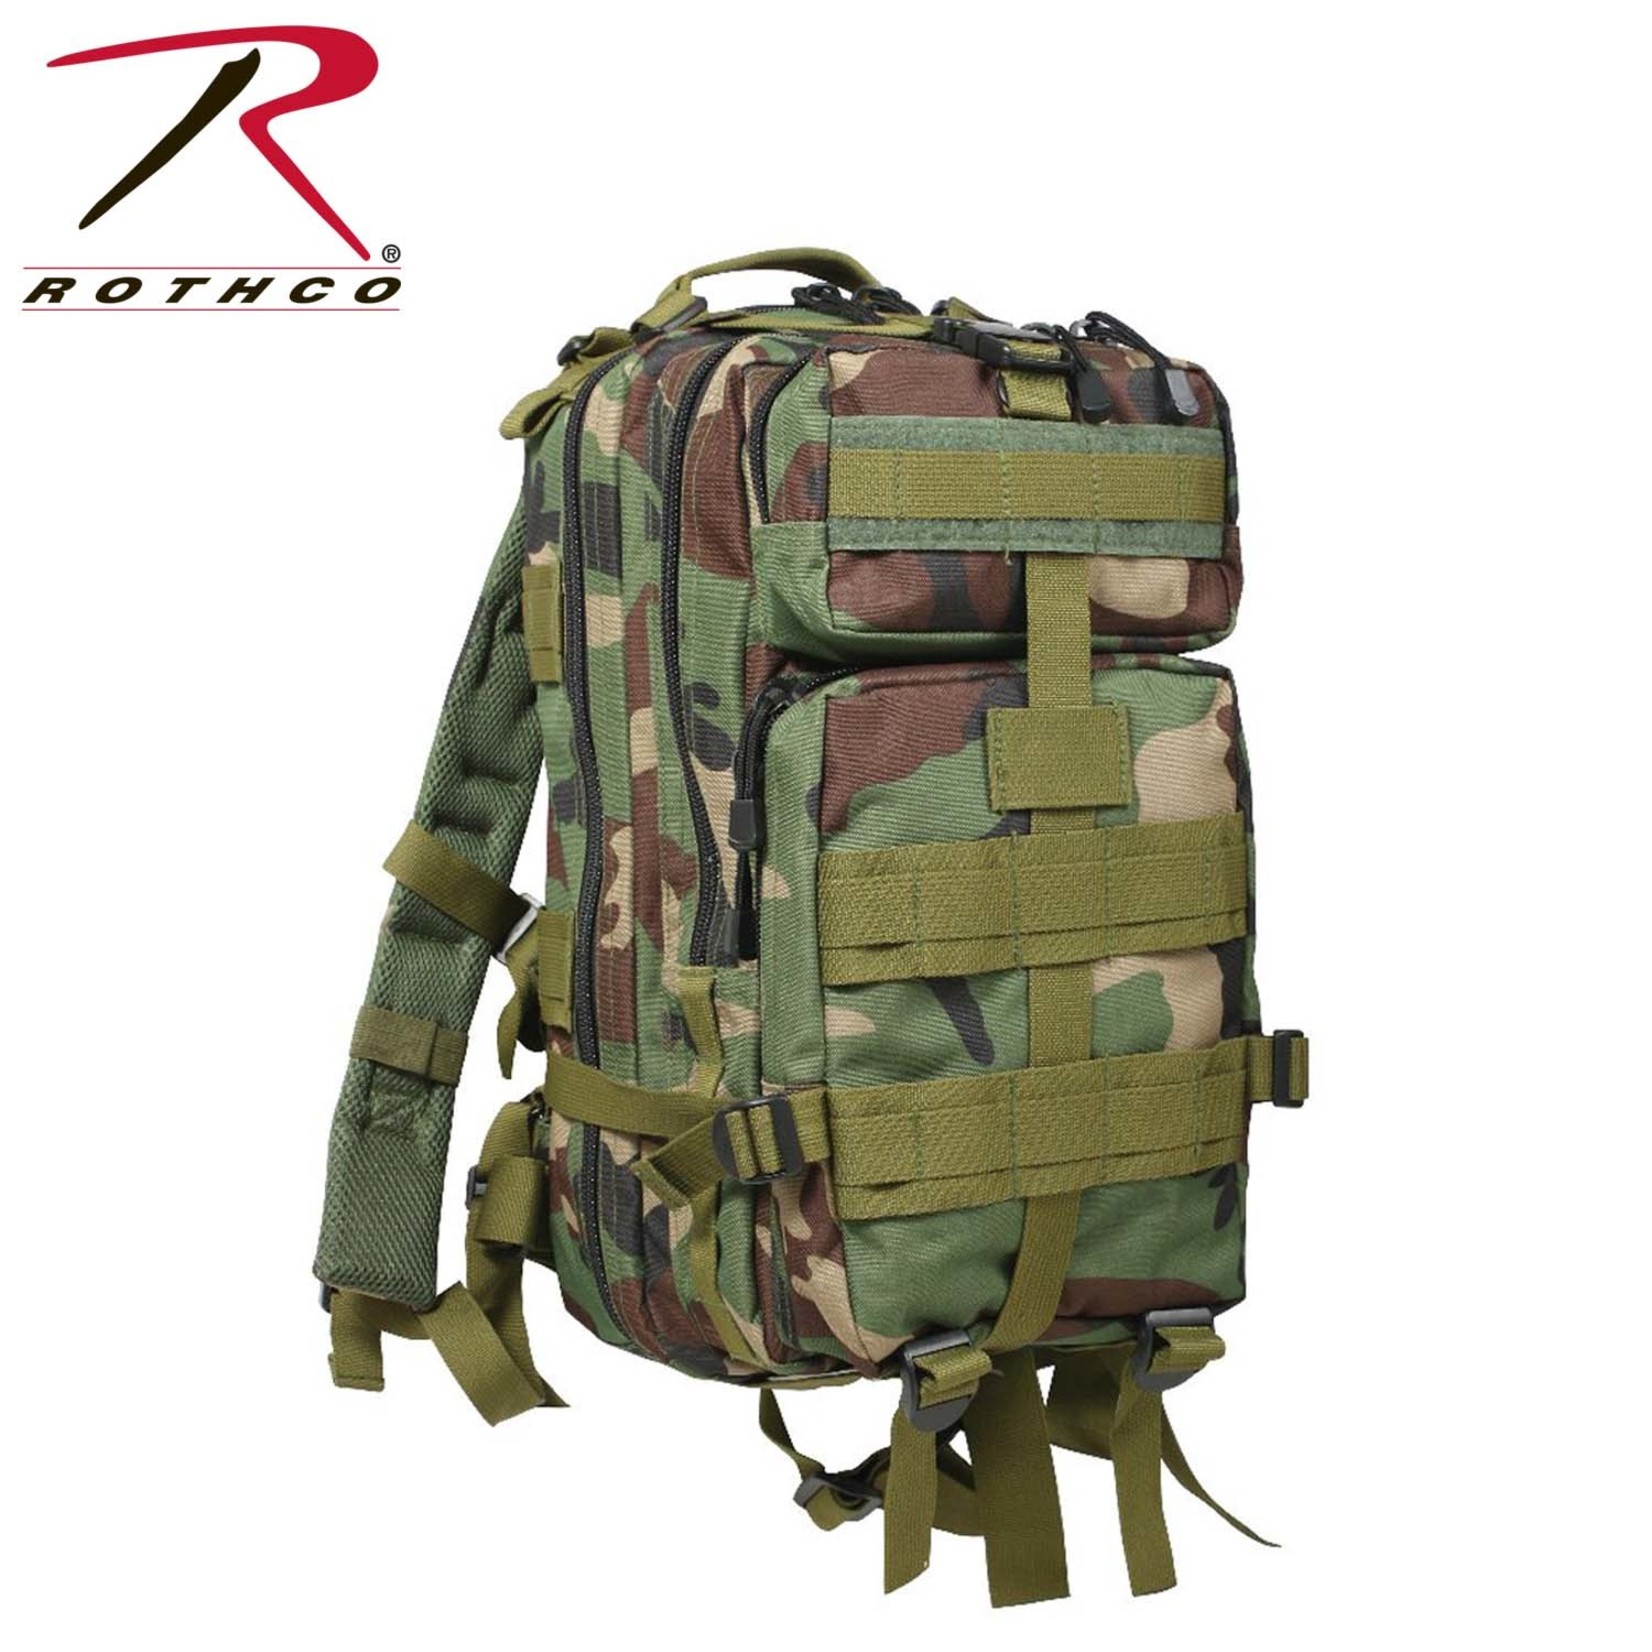 Rothco Rothco Camo Medium Transport Backpack